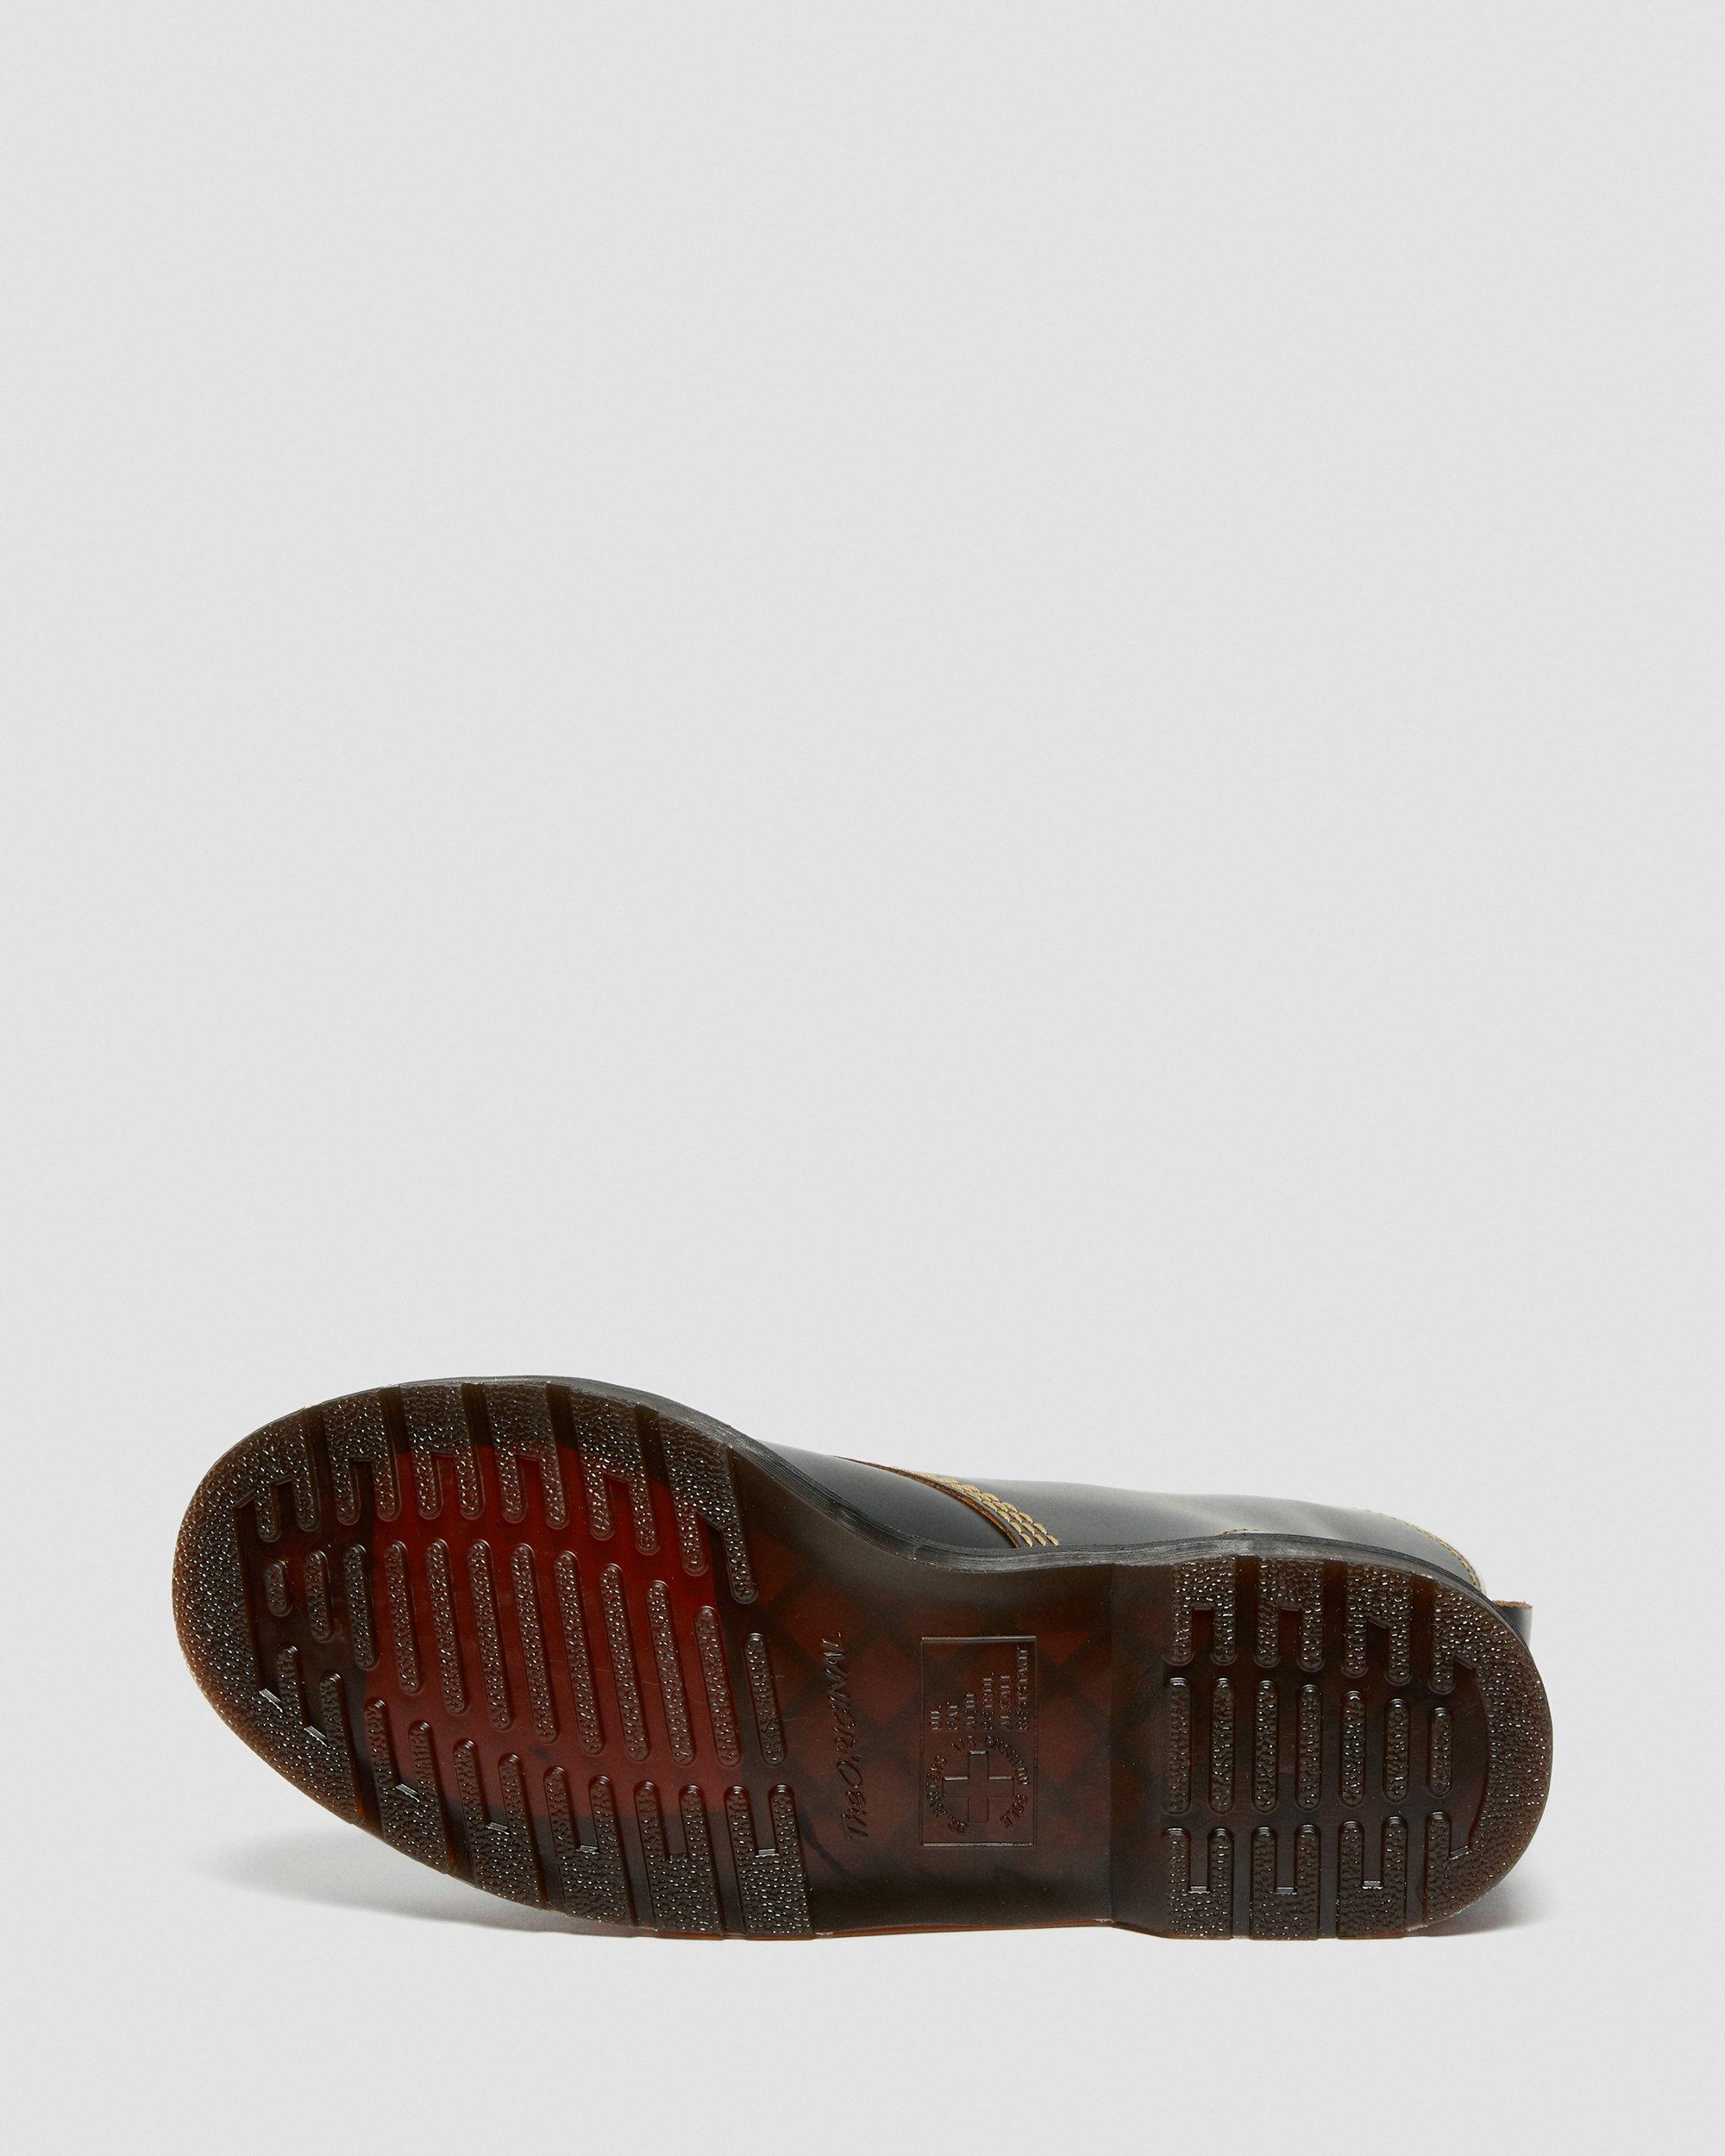 Capper Vintage Smooth Leather Boots | Dr. Martens